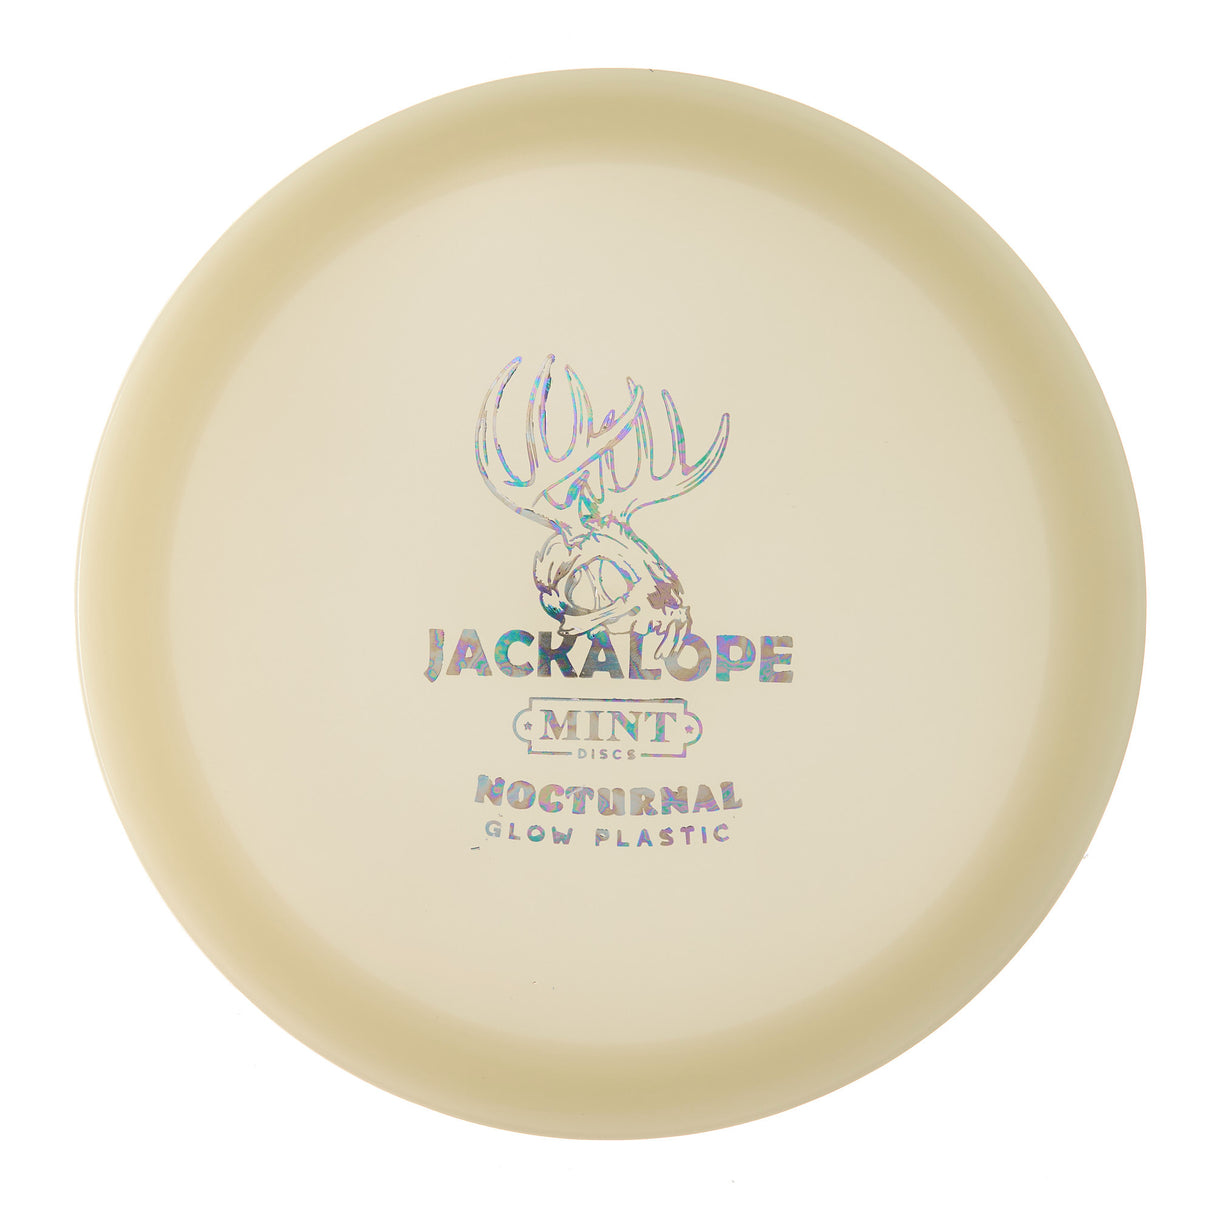 Mint Discs Jackalope - Nocturnal Glow 177g | Style 0001